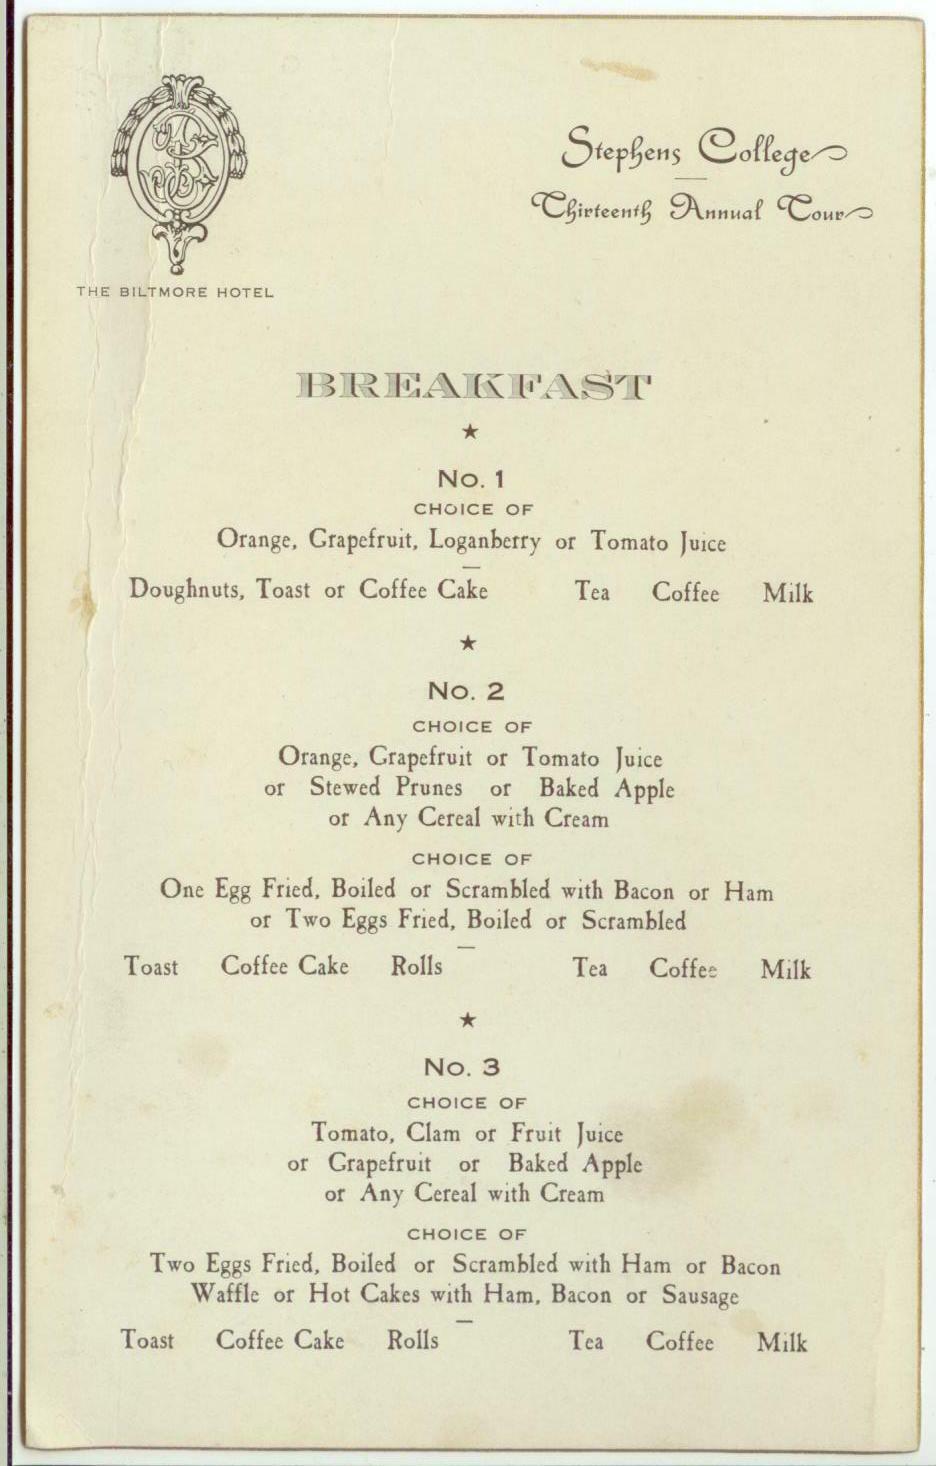 c1933 The Biltmore Hotel breakfast menu - Stephens College 13th Annual Tour